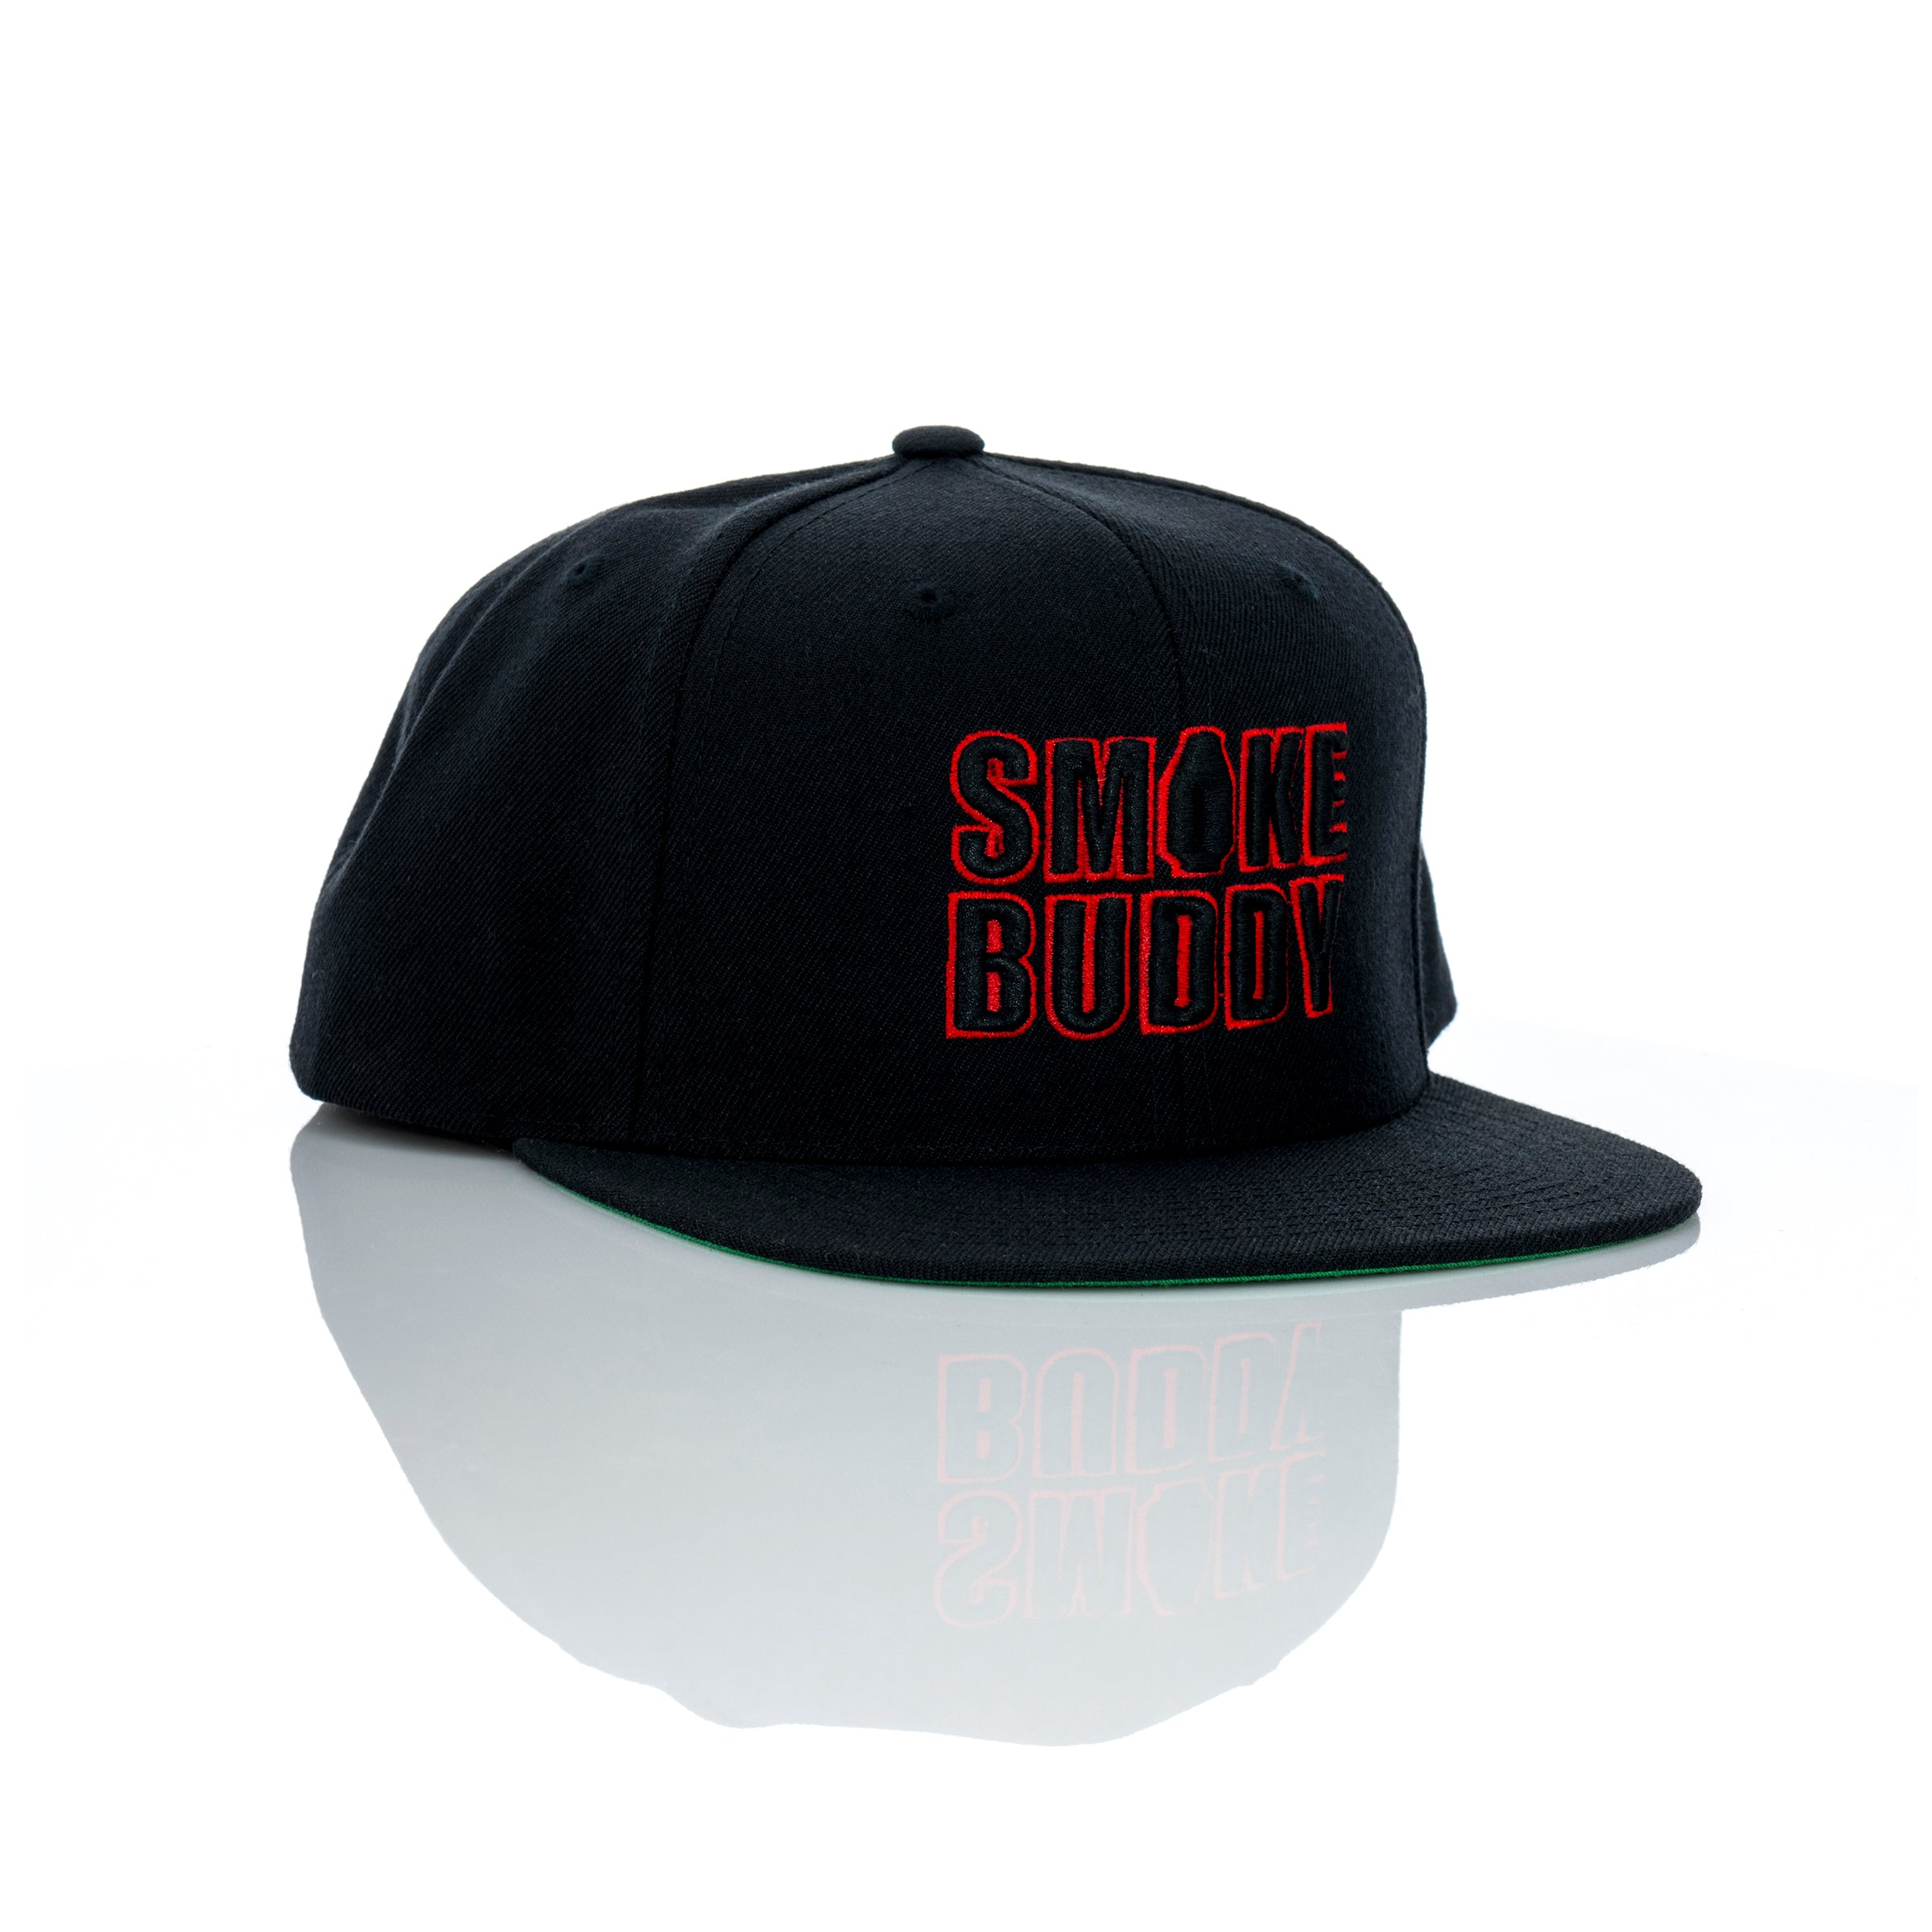 Smokebuddy Black & Red 3D Snapback Hat